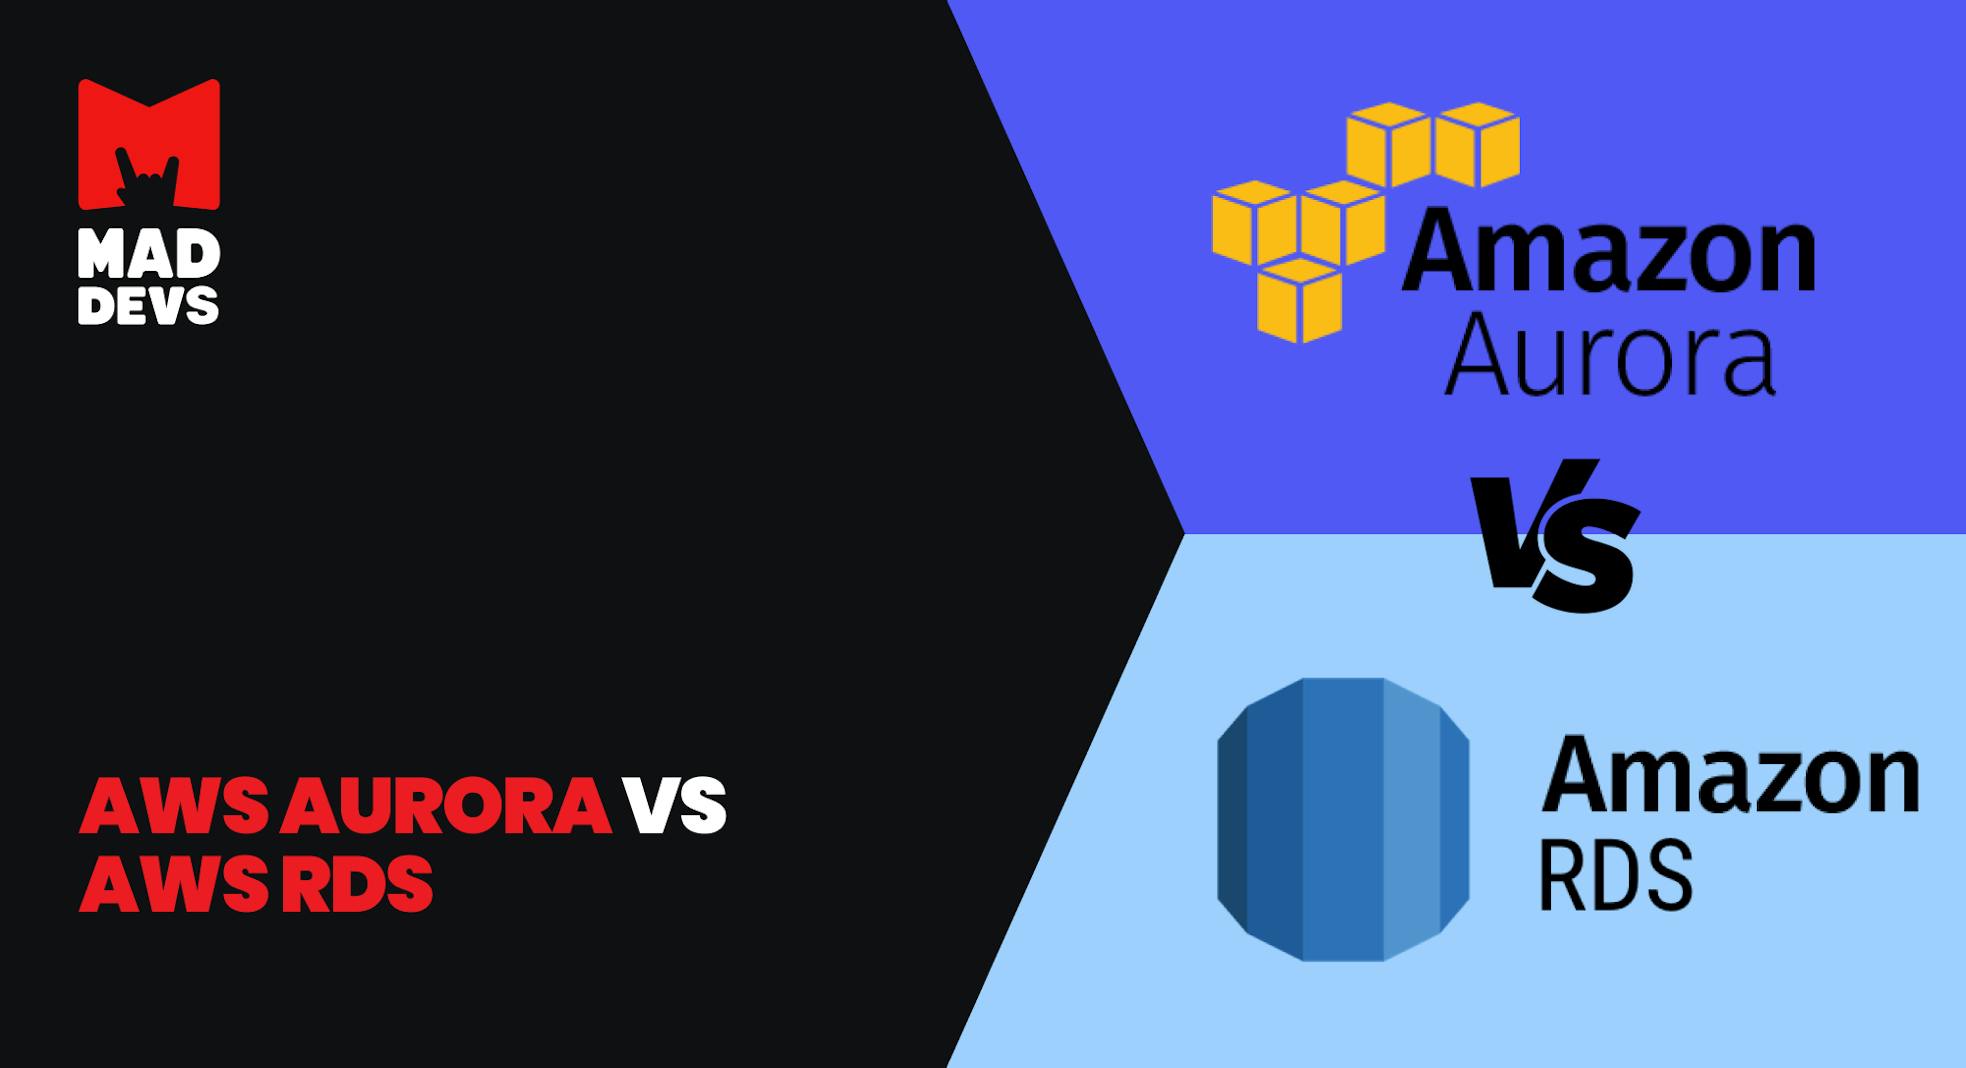 AWS Aurora vs AWS RDS